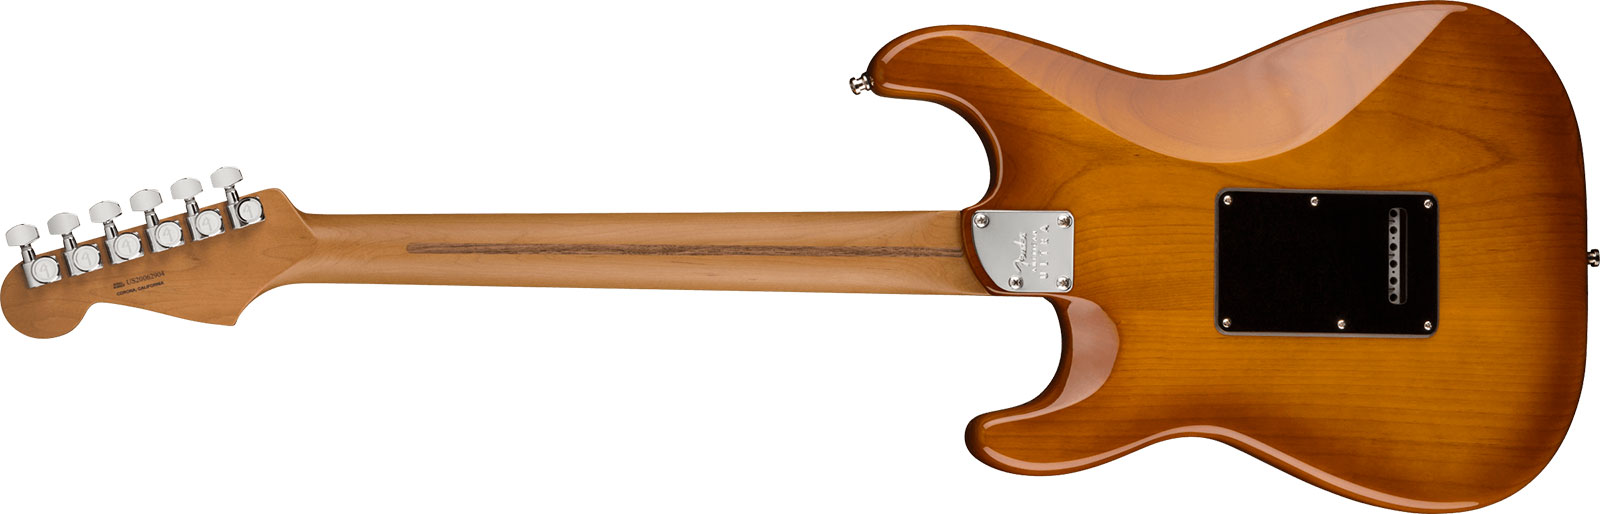 Fender Strat American Ultra Roasted Fretboard Ltd Usa 3s Trem Mn - Honey Burst - Guitarra eléctrica con forma de str. - Variation 1